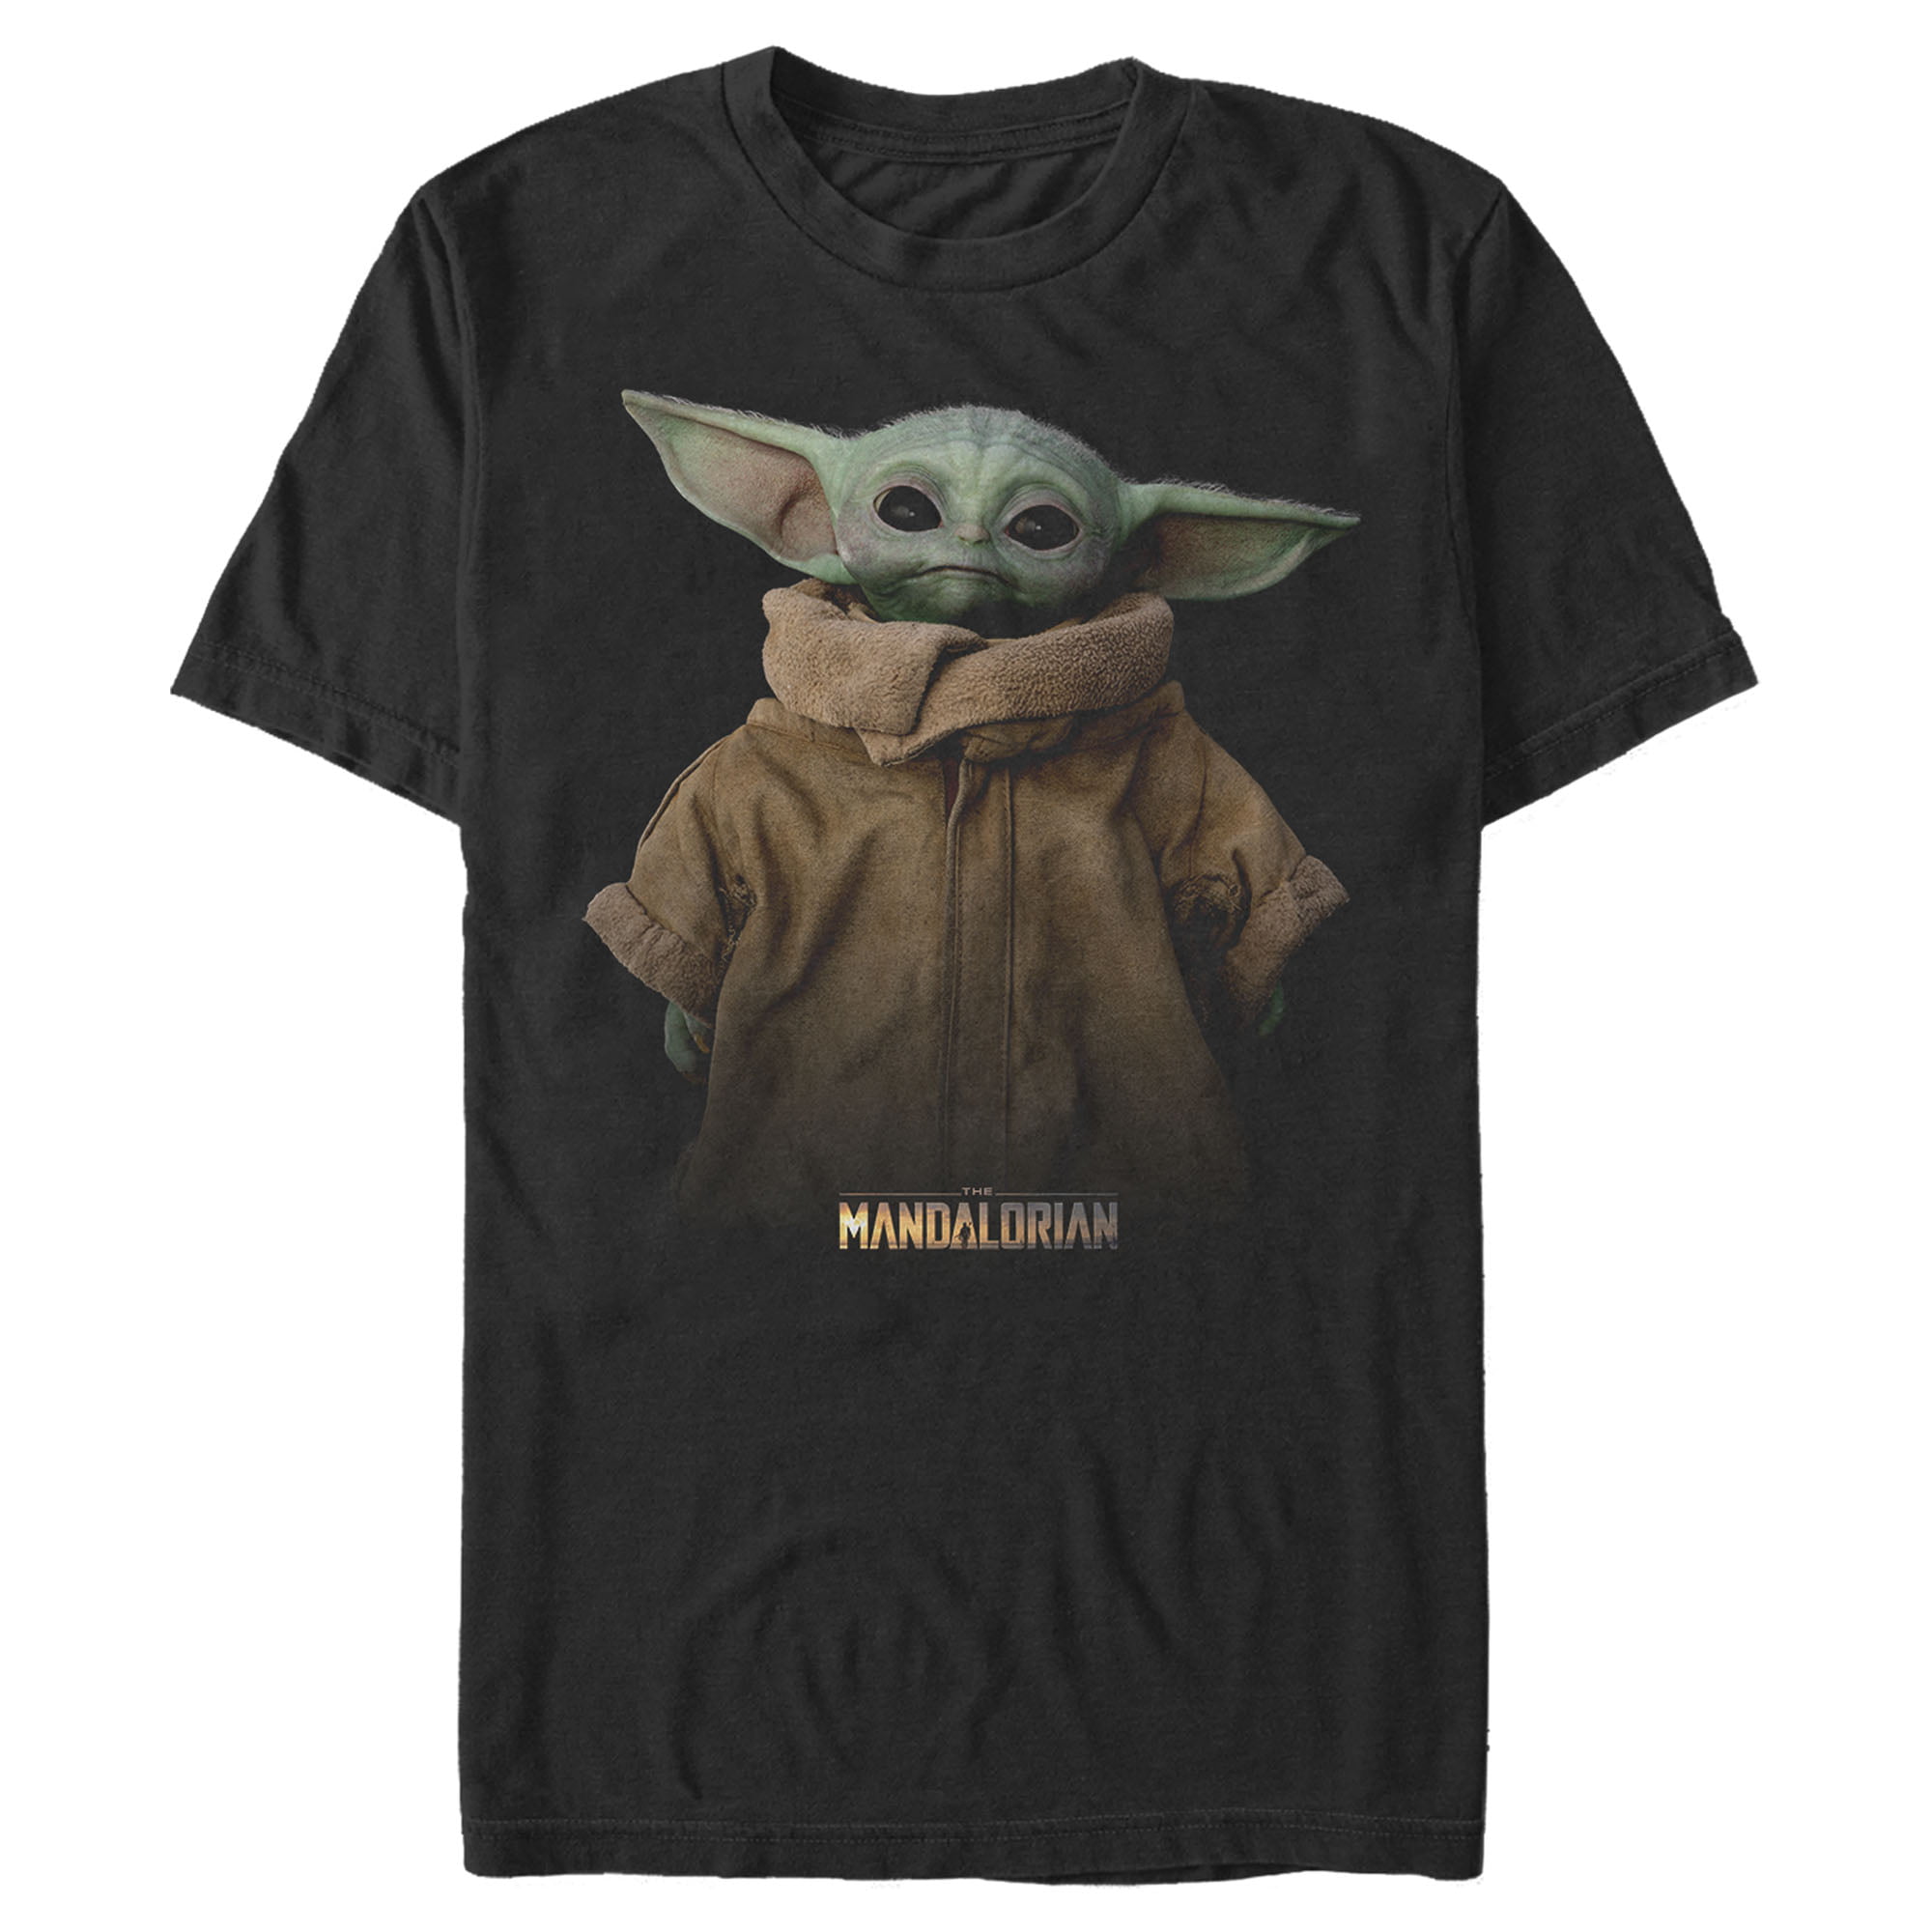 Love Star Wars Gift t022 Star Wars The Mandalorian Shirt This Is The Way Shirt The Mandalorian Baby Yoda Shirt Star Wars Baby Yoda Shirt